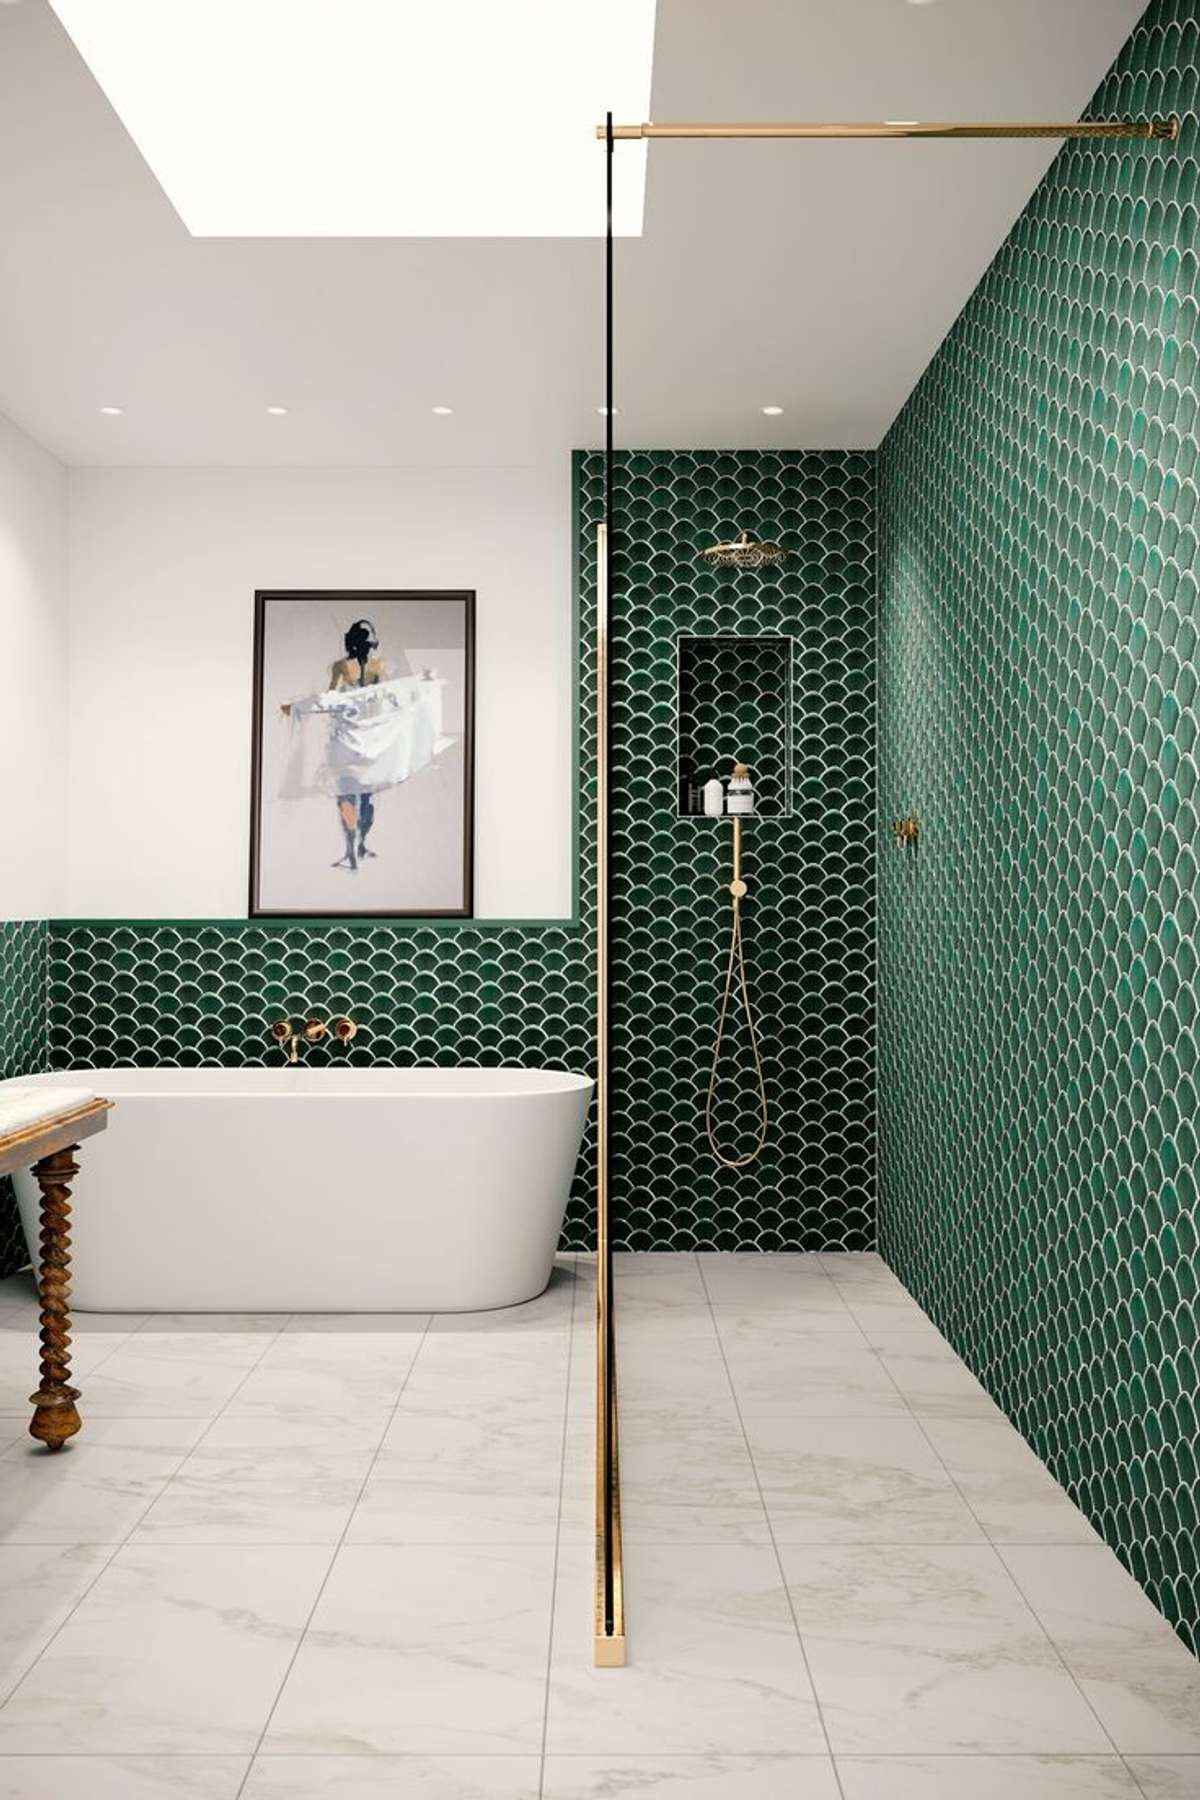 tile adhesive for bathroom
#koko
#BathroomTIles #tileadhesive #tiles
#tilechemical